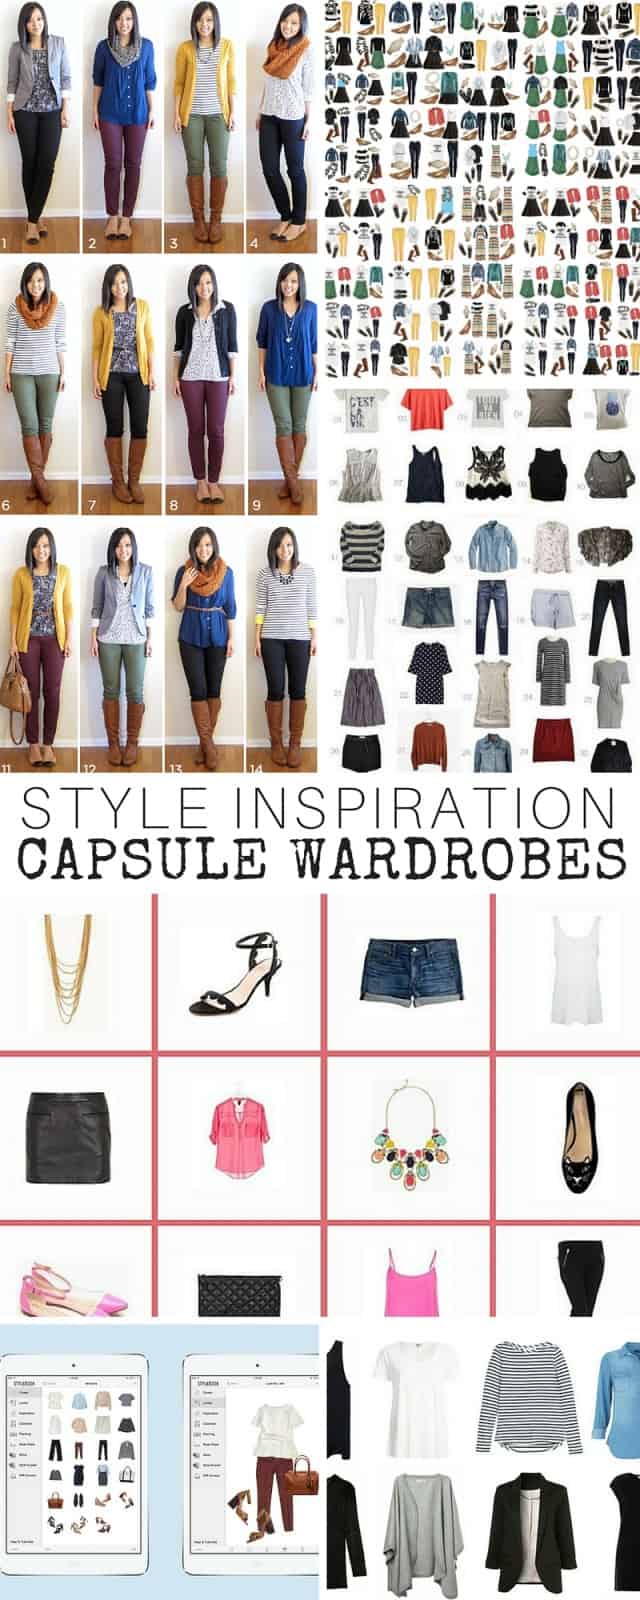 Capsule Wardrobe Fashion and Style Ideas